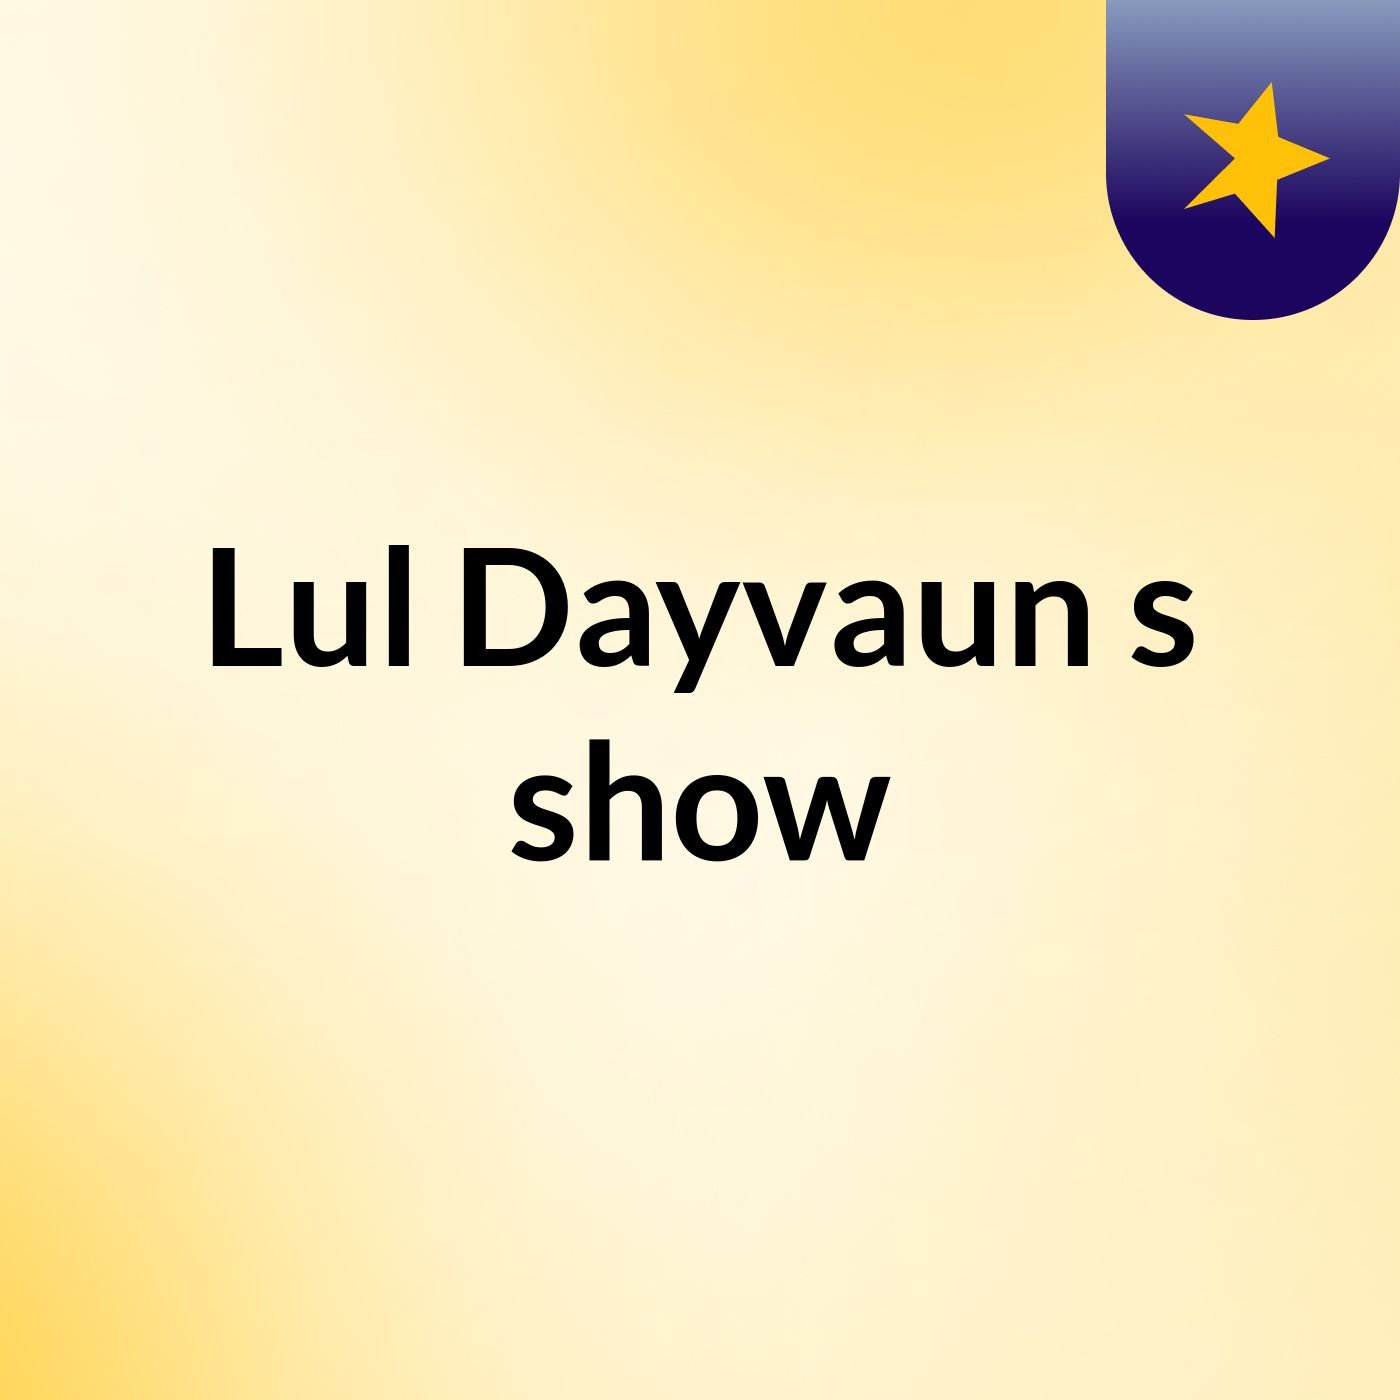 Lul Dayvaun's show